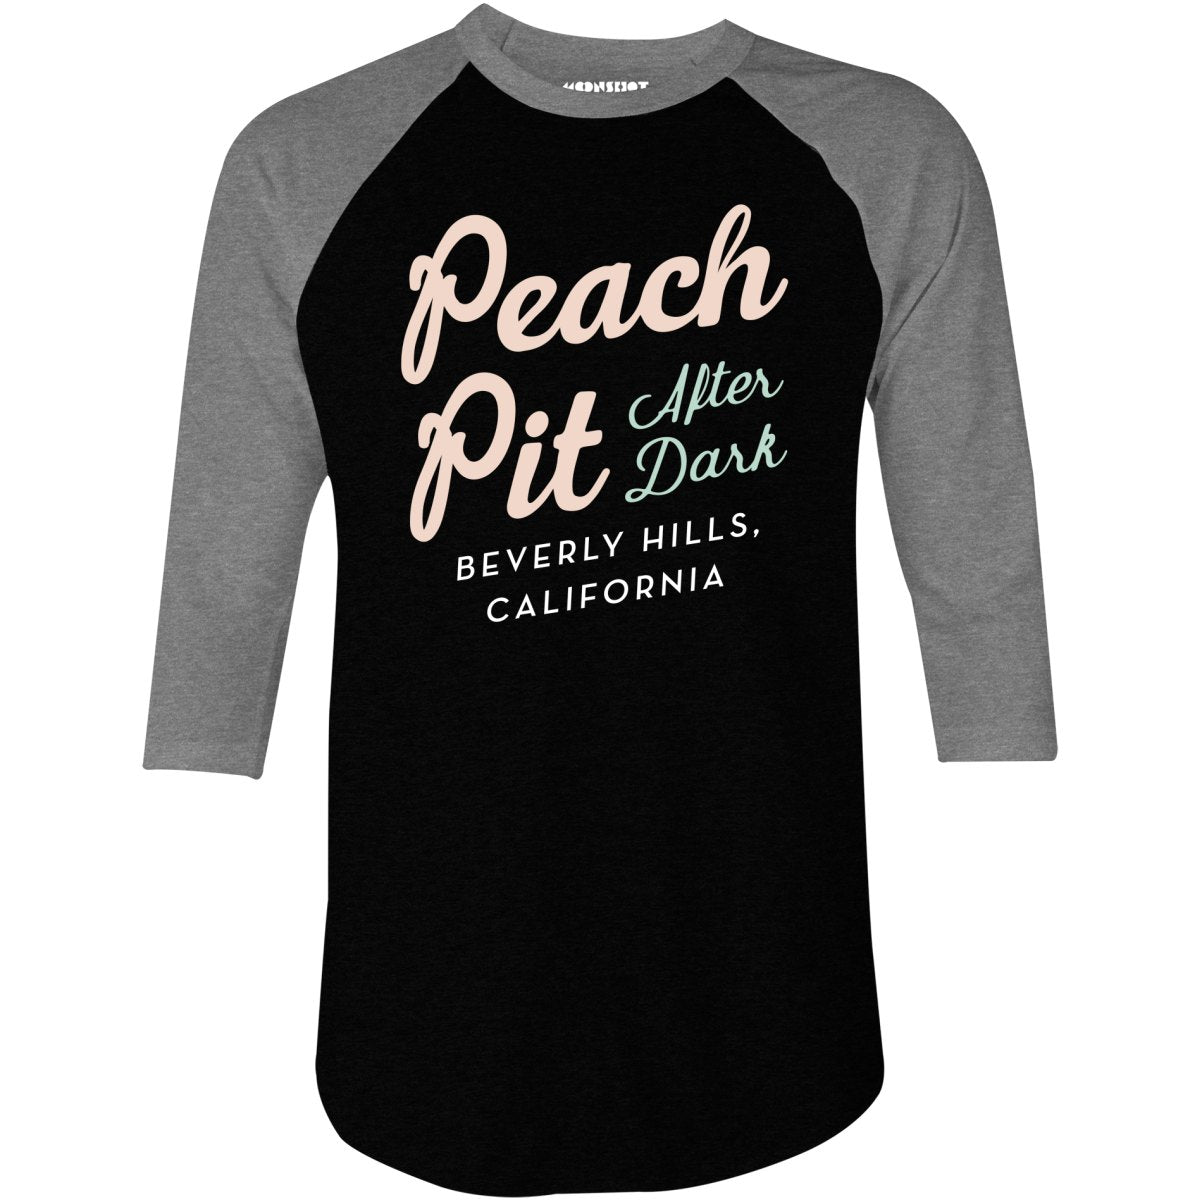 Peach Pit After Dark 90210 v2 - 3/4 Sleeve Raglan T-Shirt